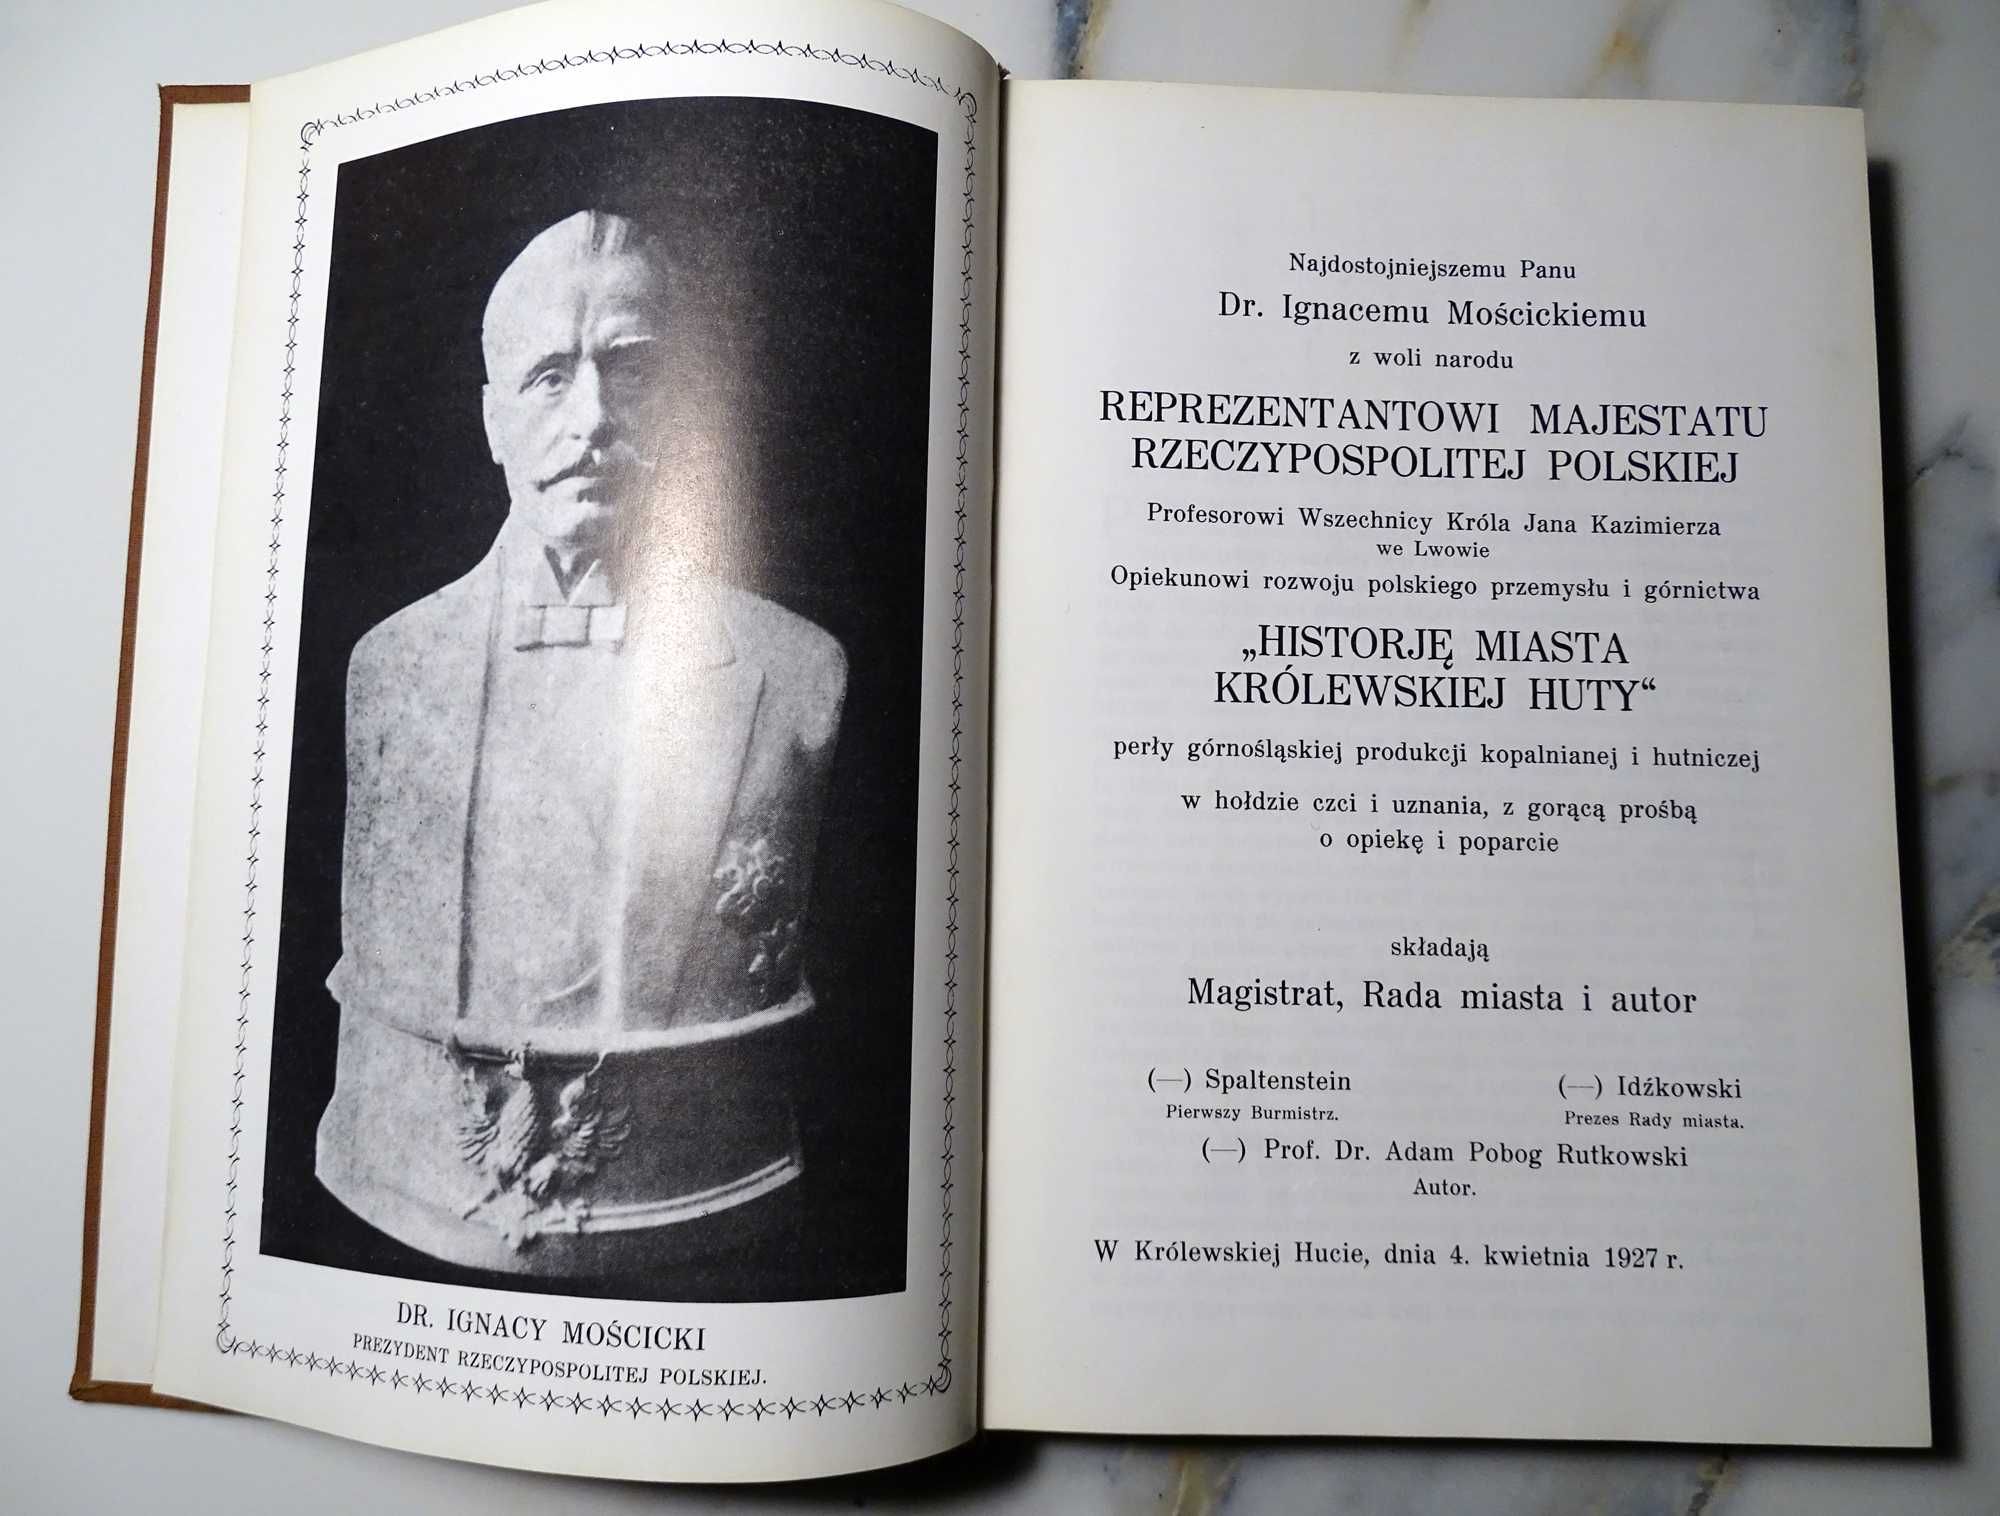 Królewska Huta (Chorzów) historia 1927 r. (1996)